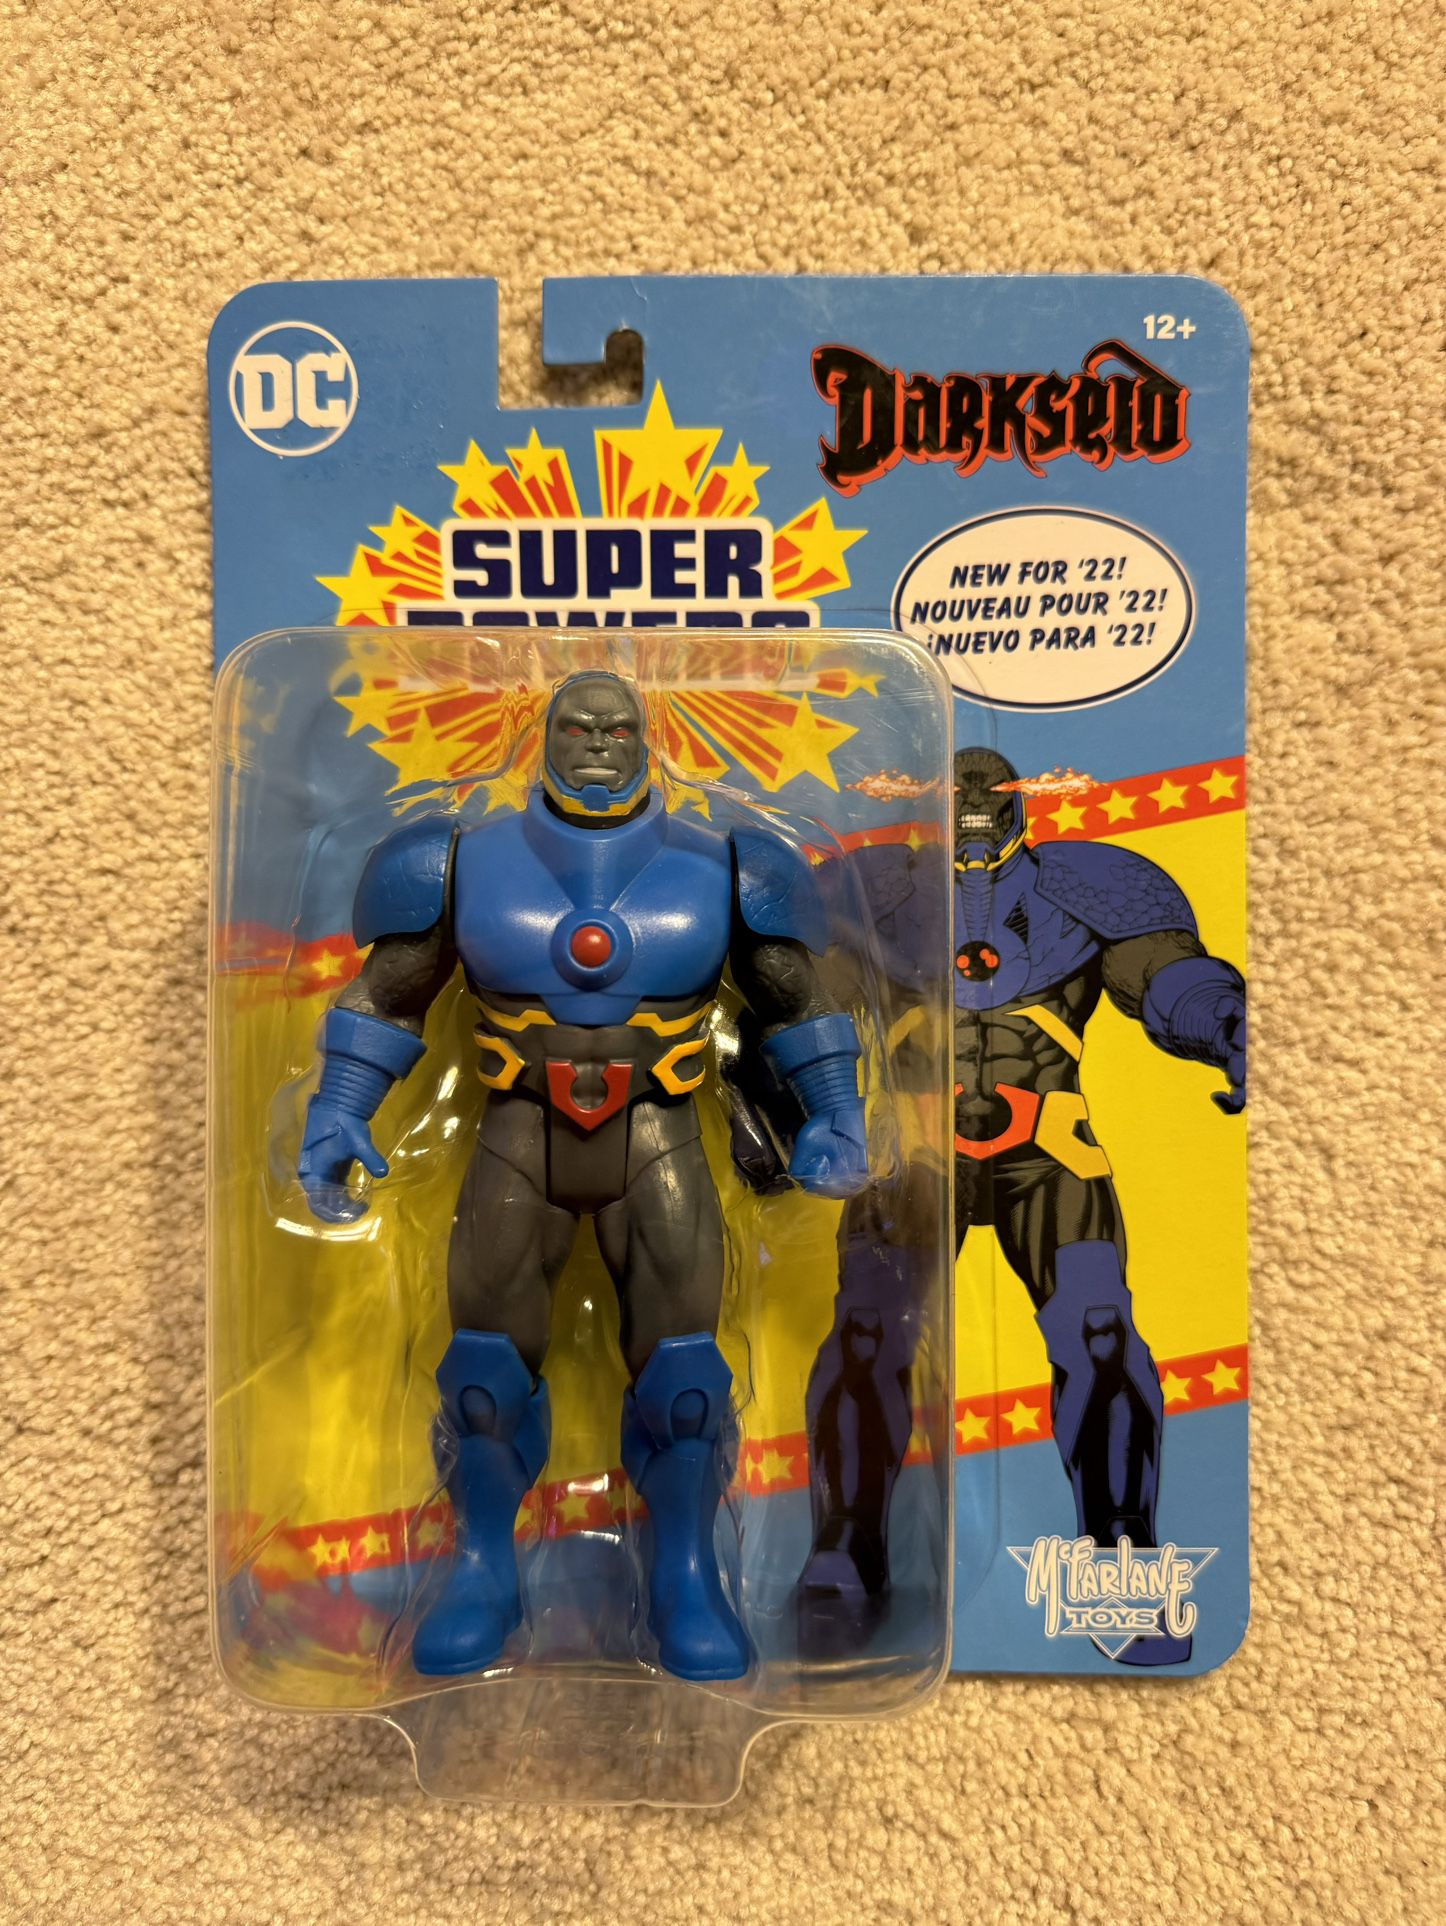 477-PTT New DC Super Powers “Darkseid “ Action Figure Sealed Mcfarlane Toys 2022